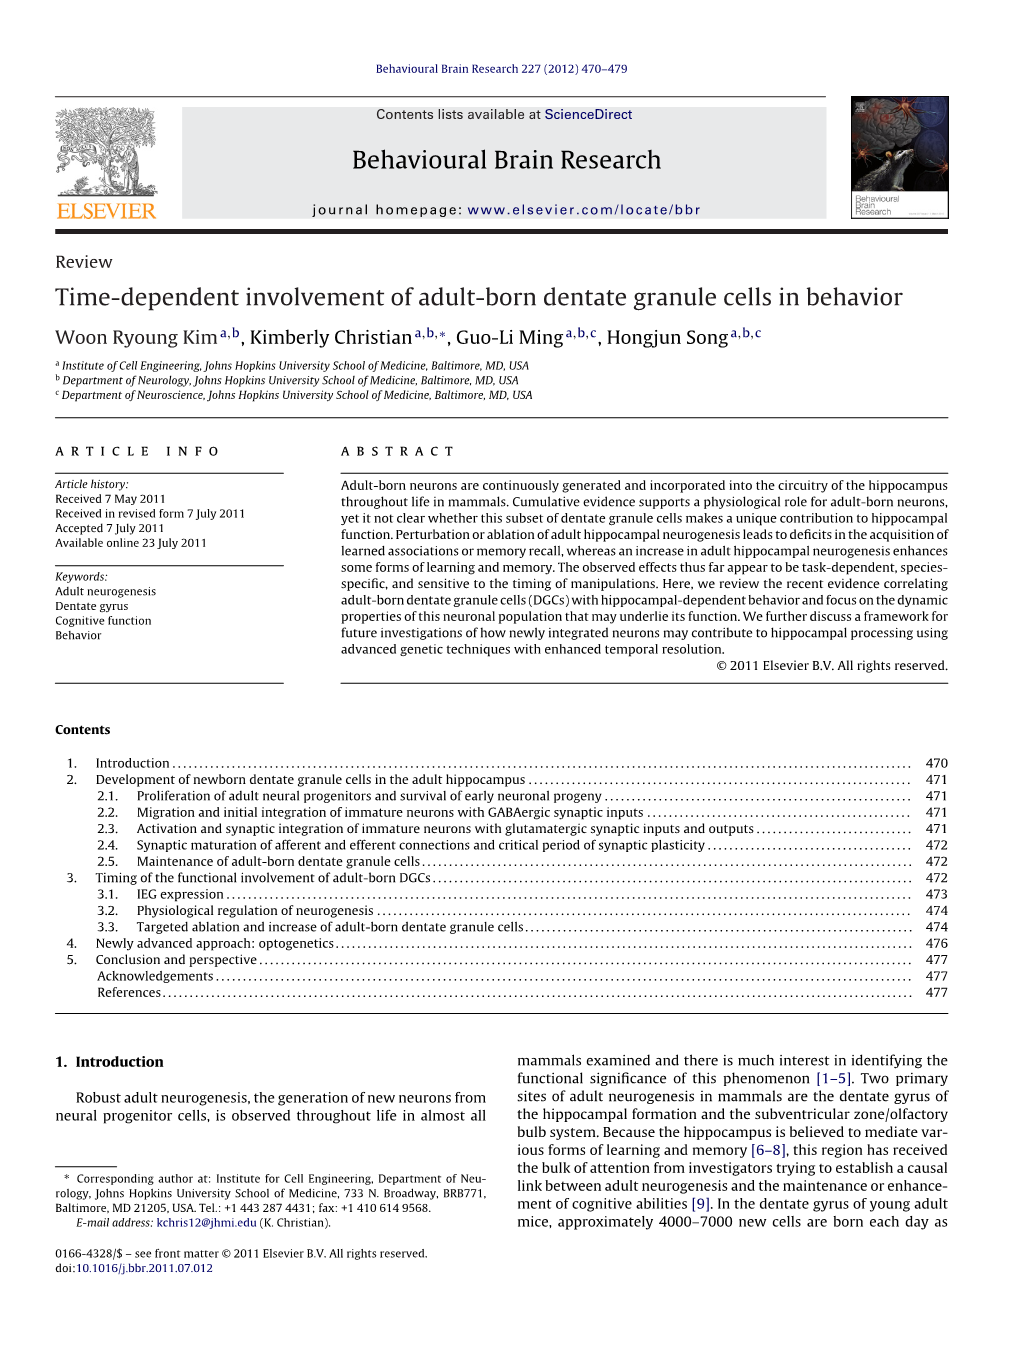 Time-Dependent Involvement of Adult-Born Dentate Granule Cells in Behavior